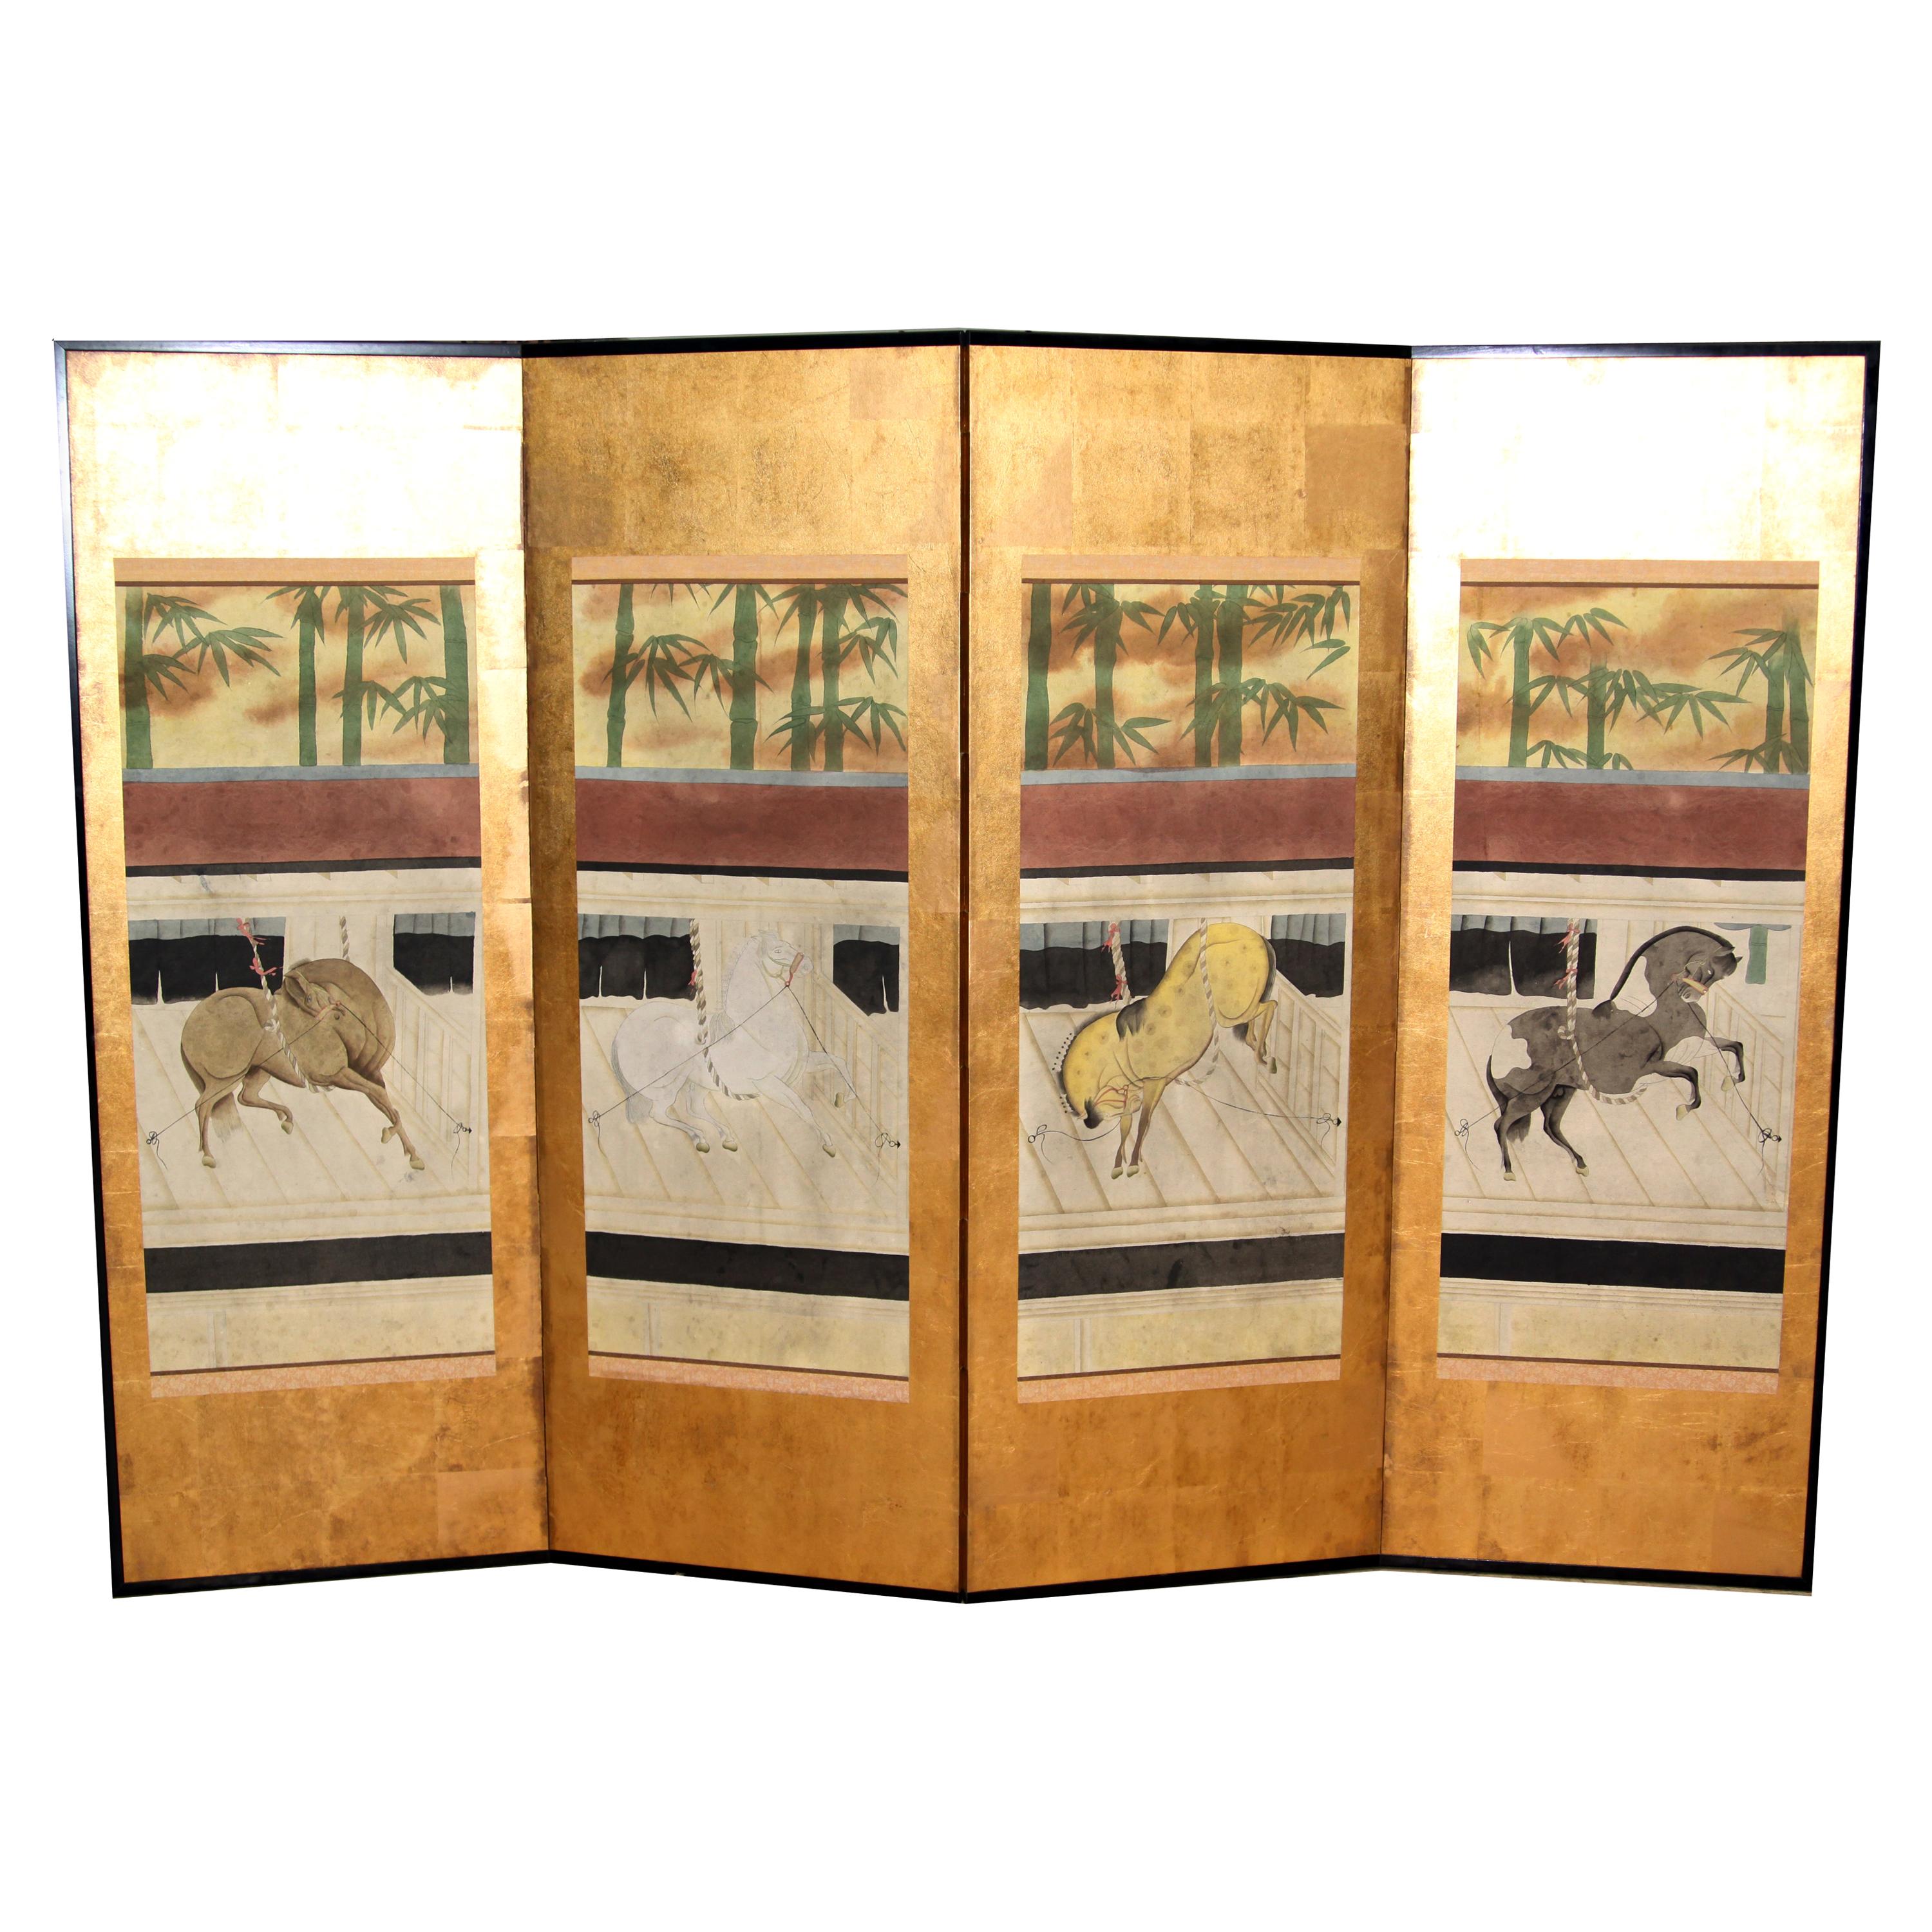 Hand Painted Japanese Folding Screen 'Byobu' Ponies Painting, Watercolor